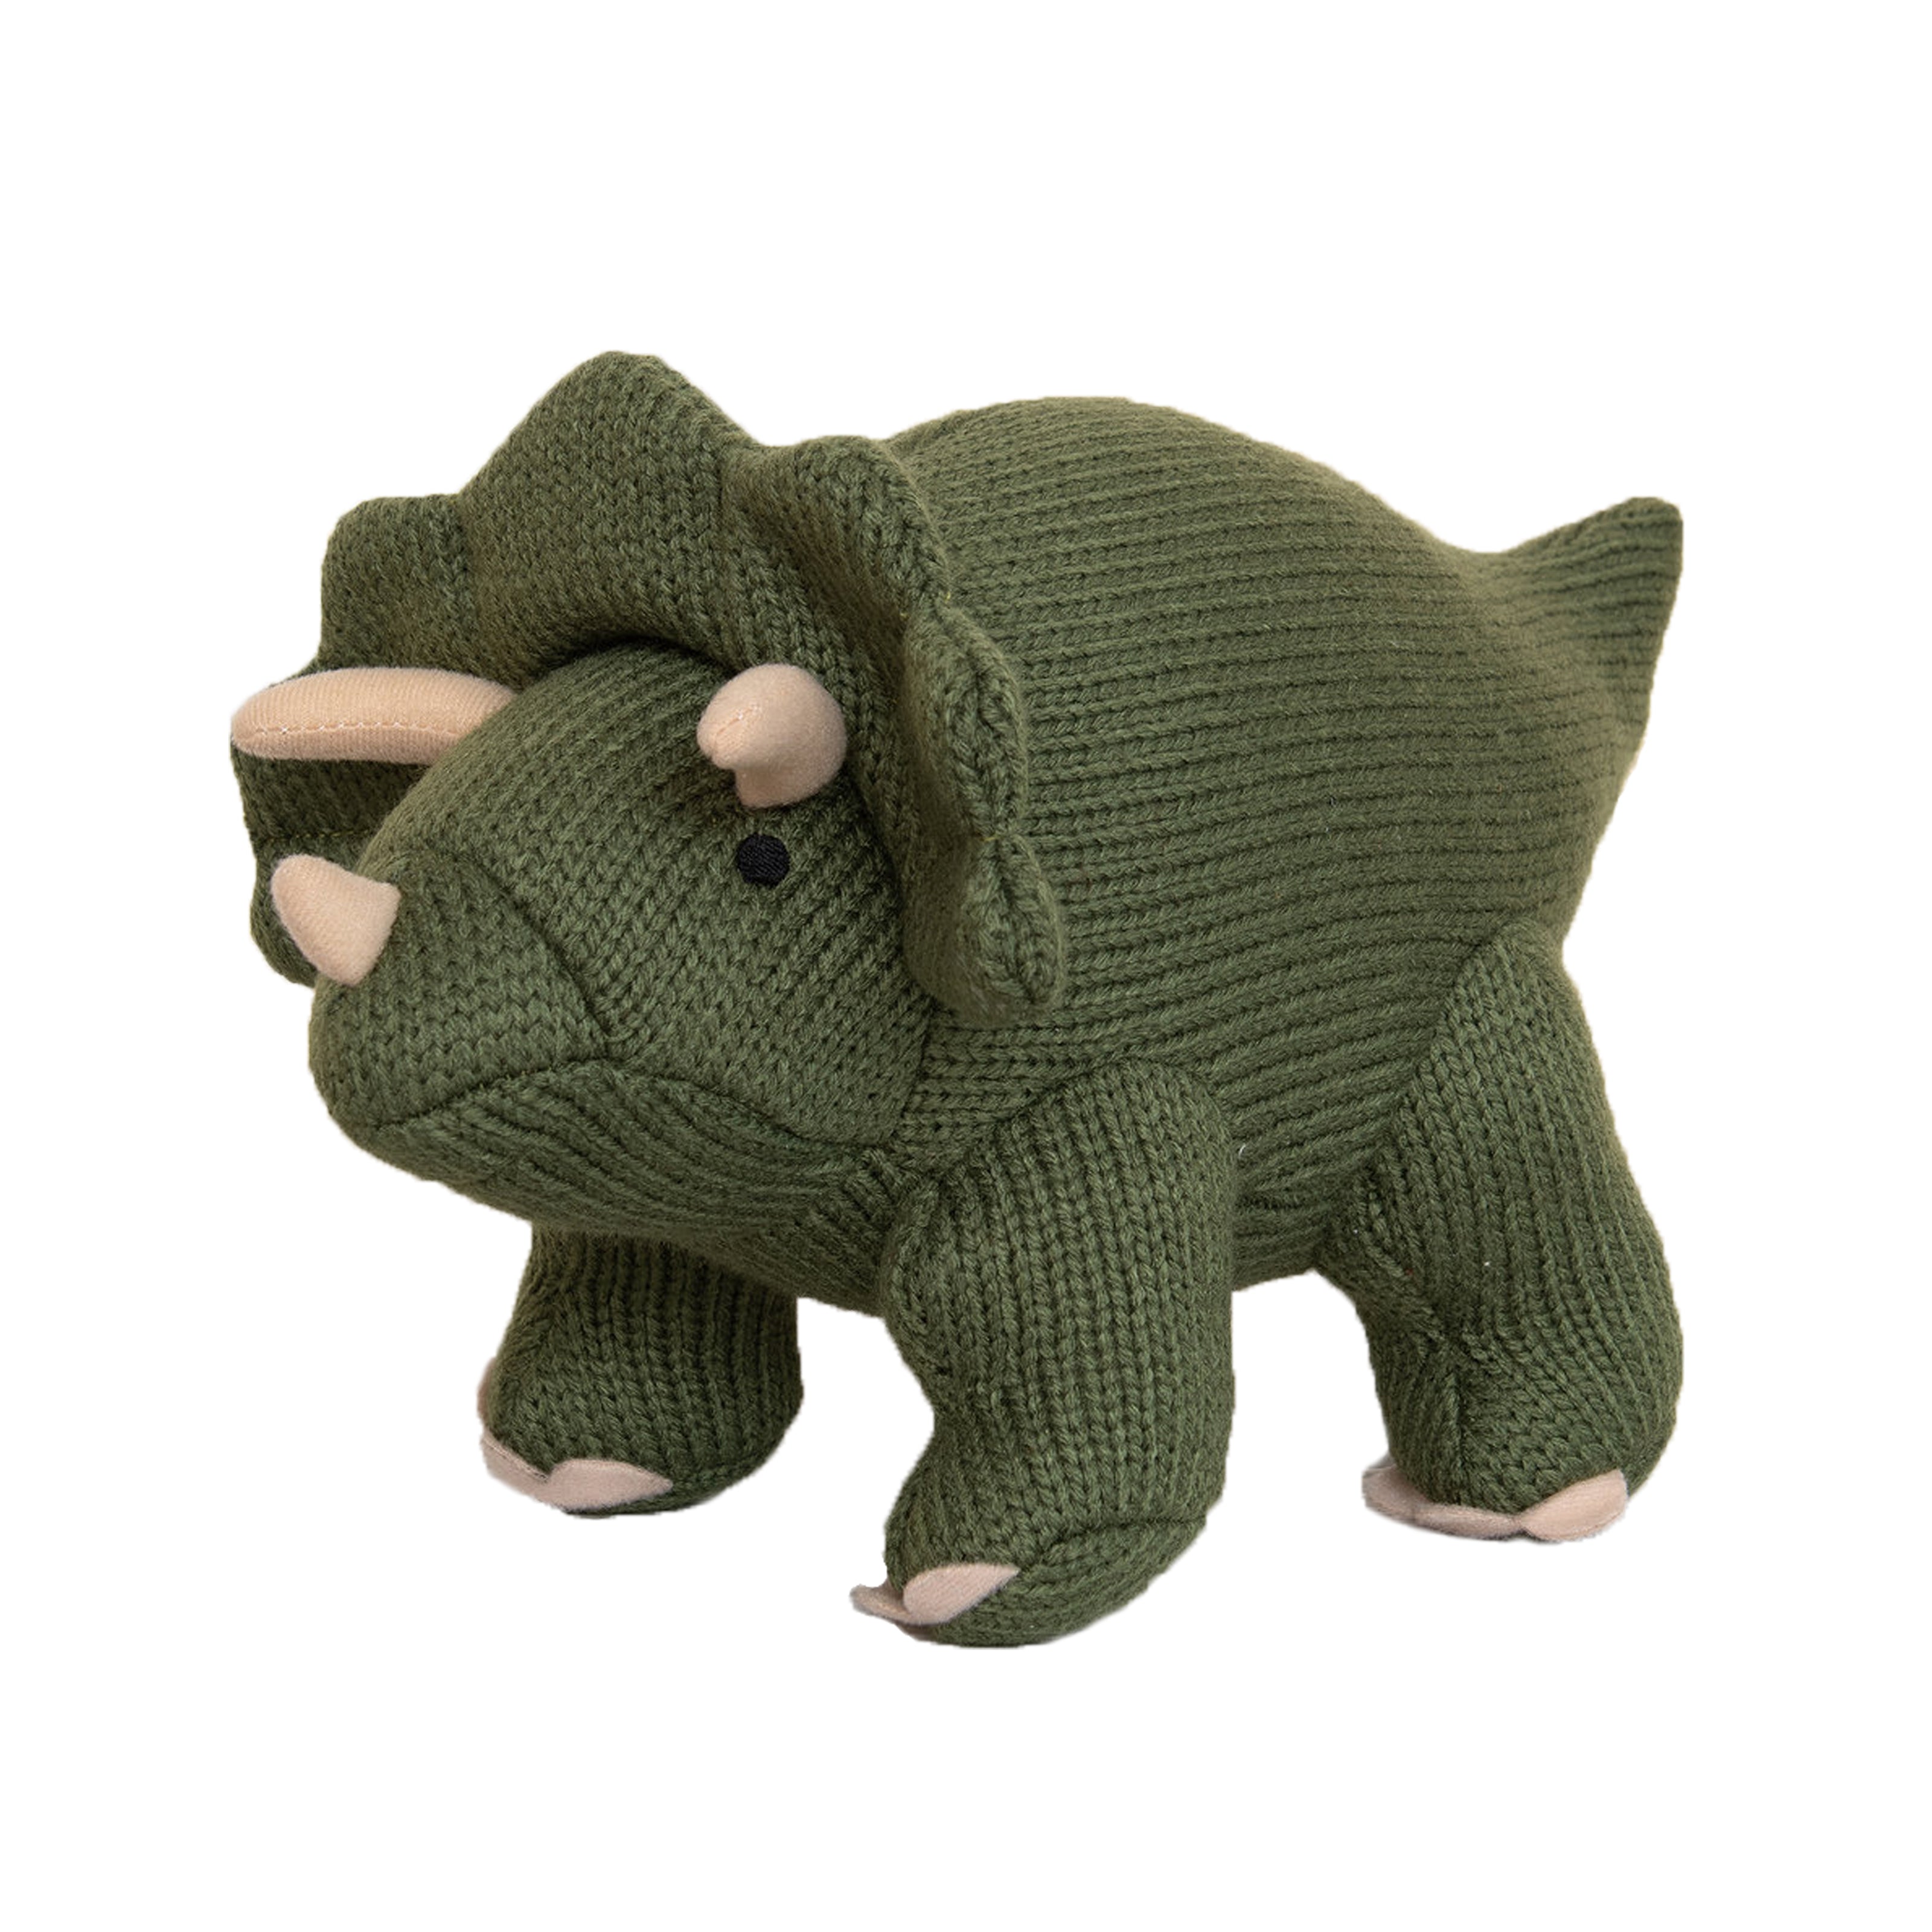 Knitted Khaki Medium Triceratops Toy